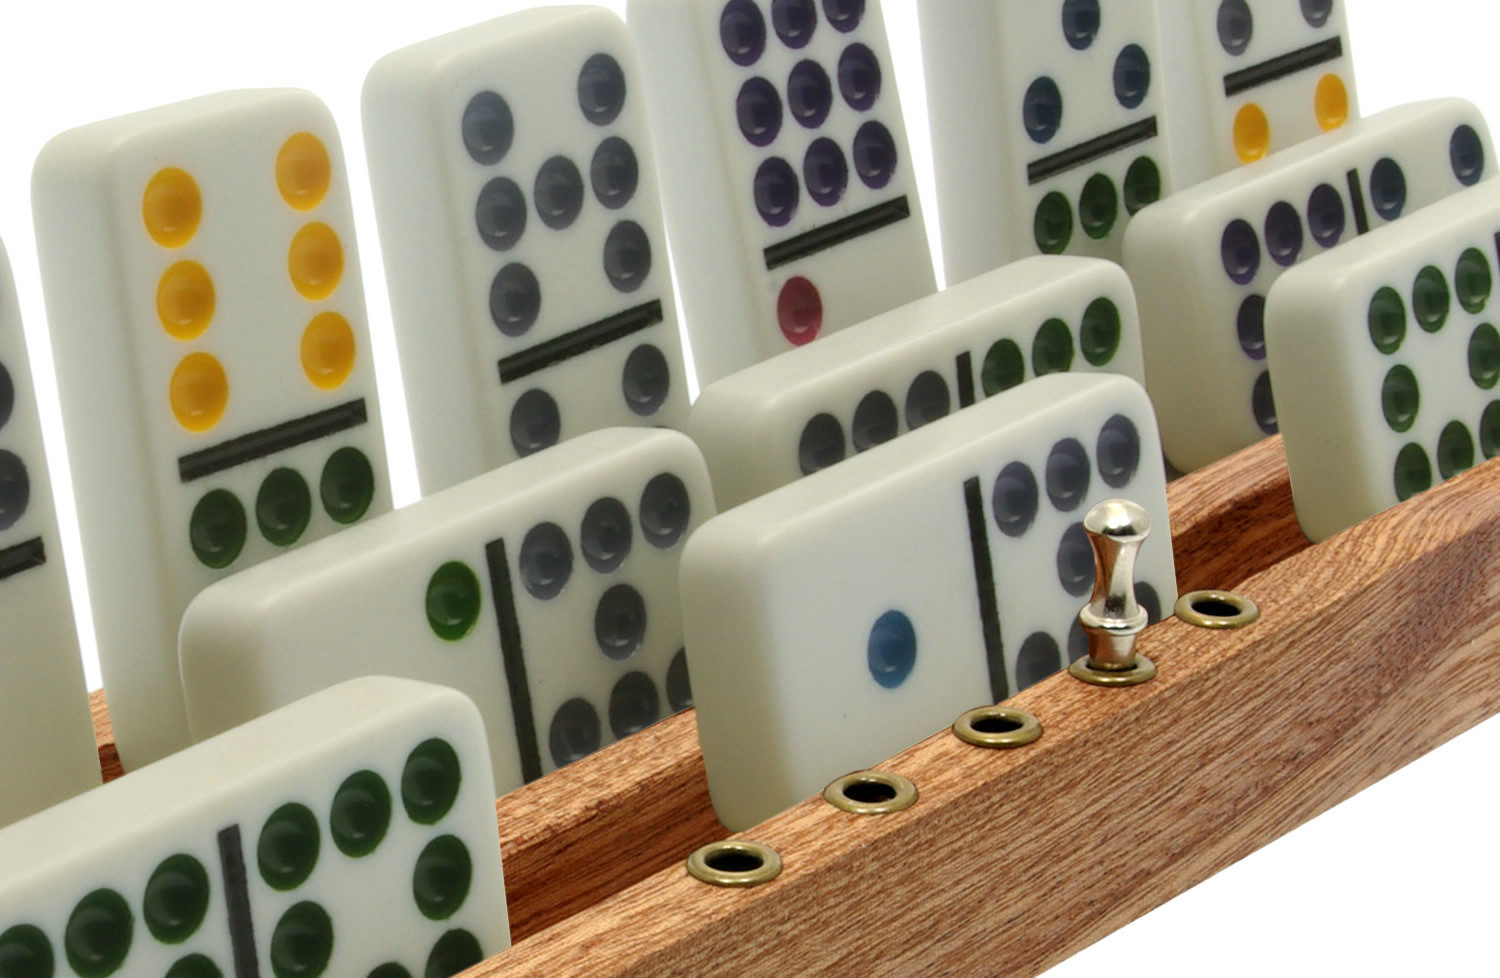 Deluxe hardwood Domino tile racks / holders